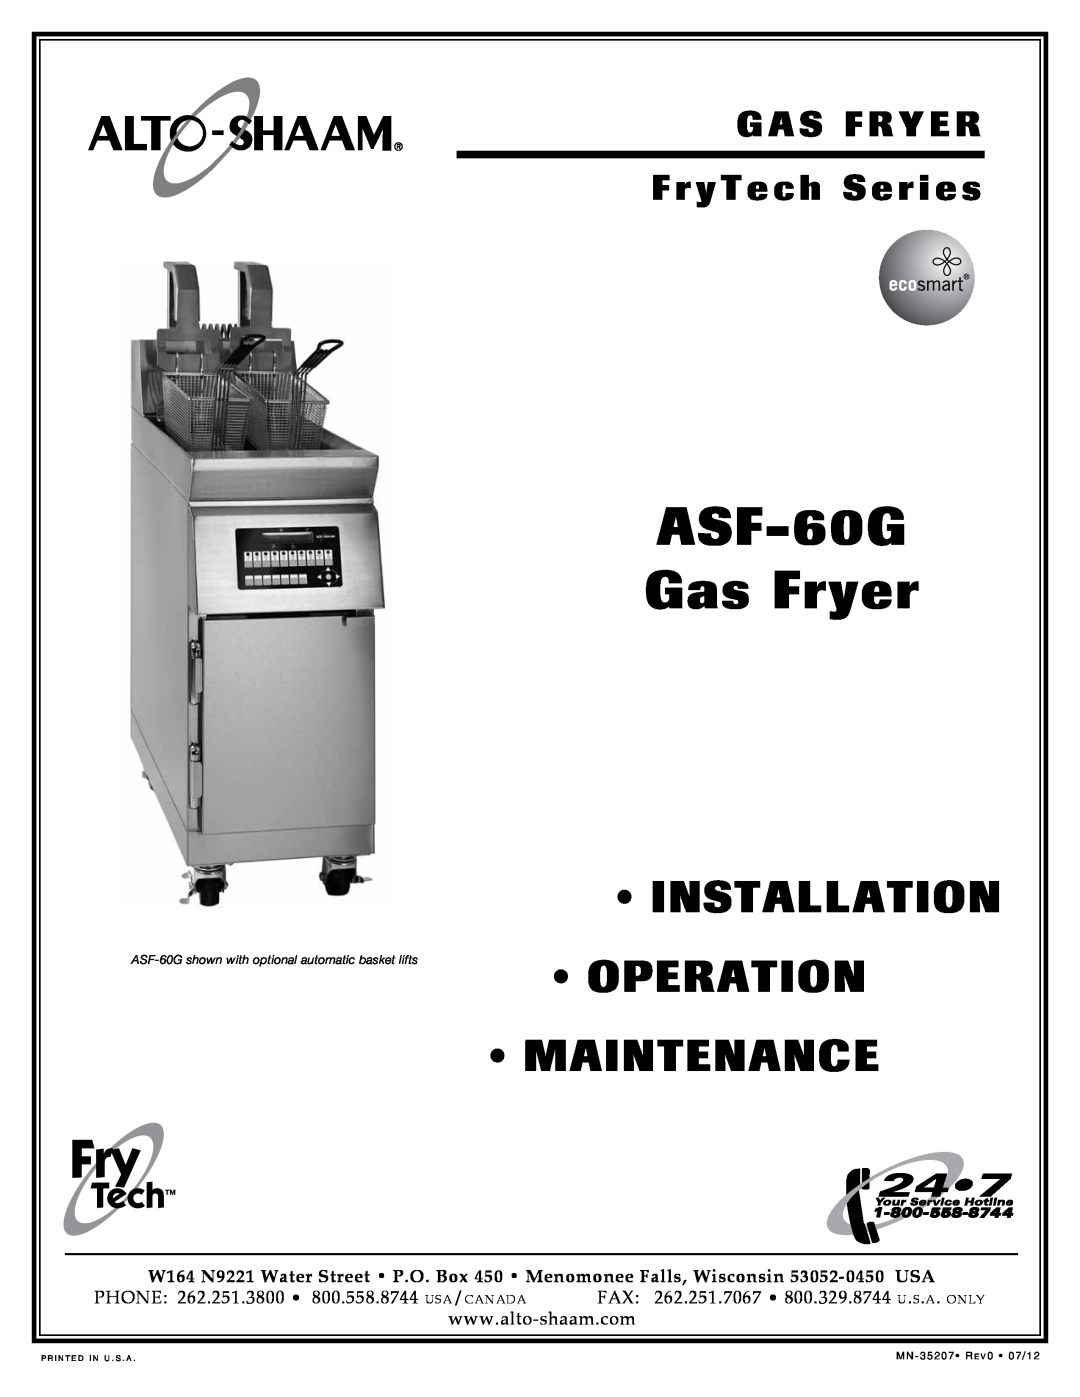 Alto-Shaam ASF-60G manual Installation, Operation, Maintenance, Gas Fryer, G A S F R Y E R, F r y T e c h S e r i e s 